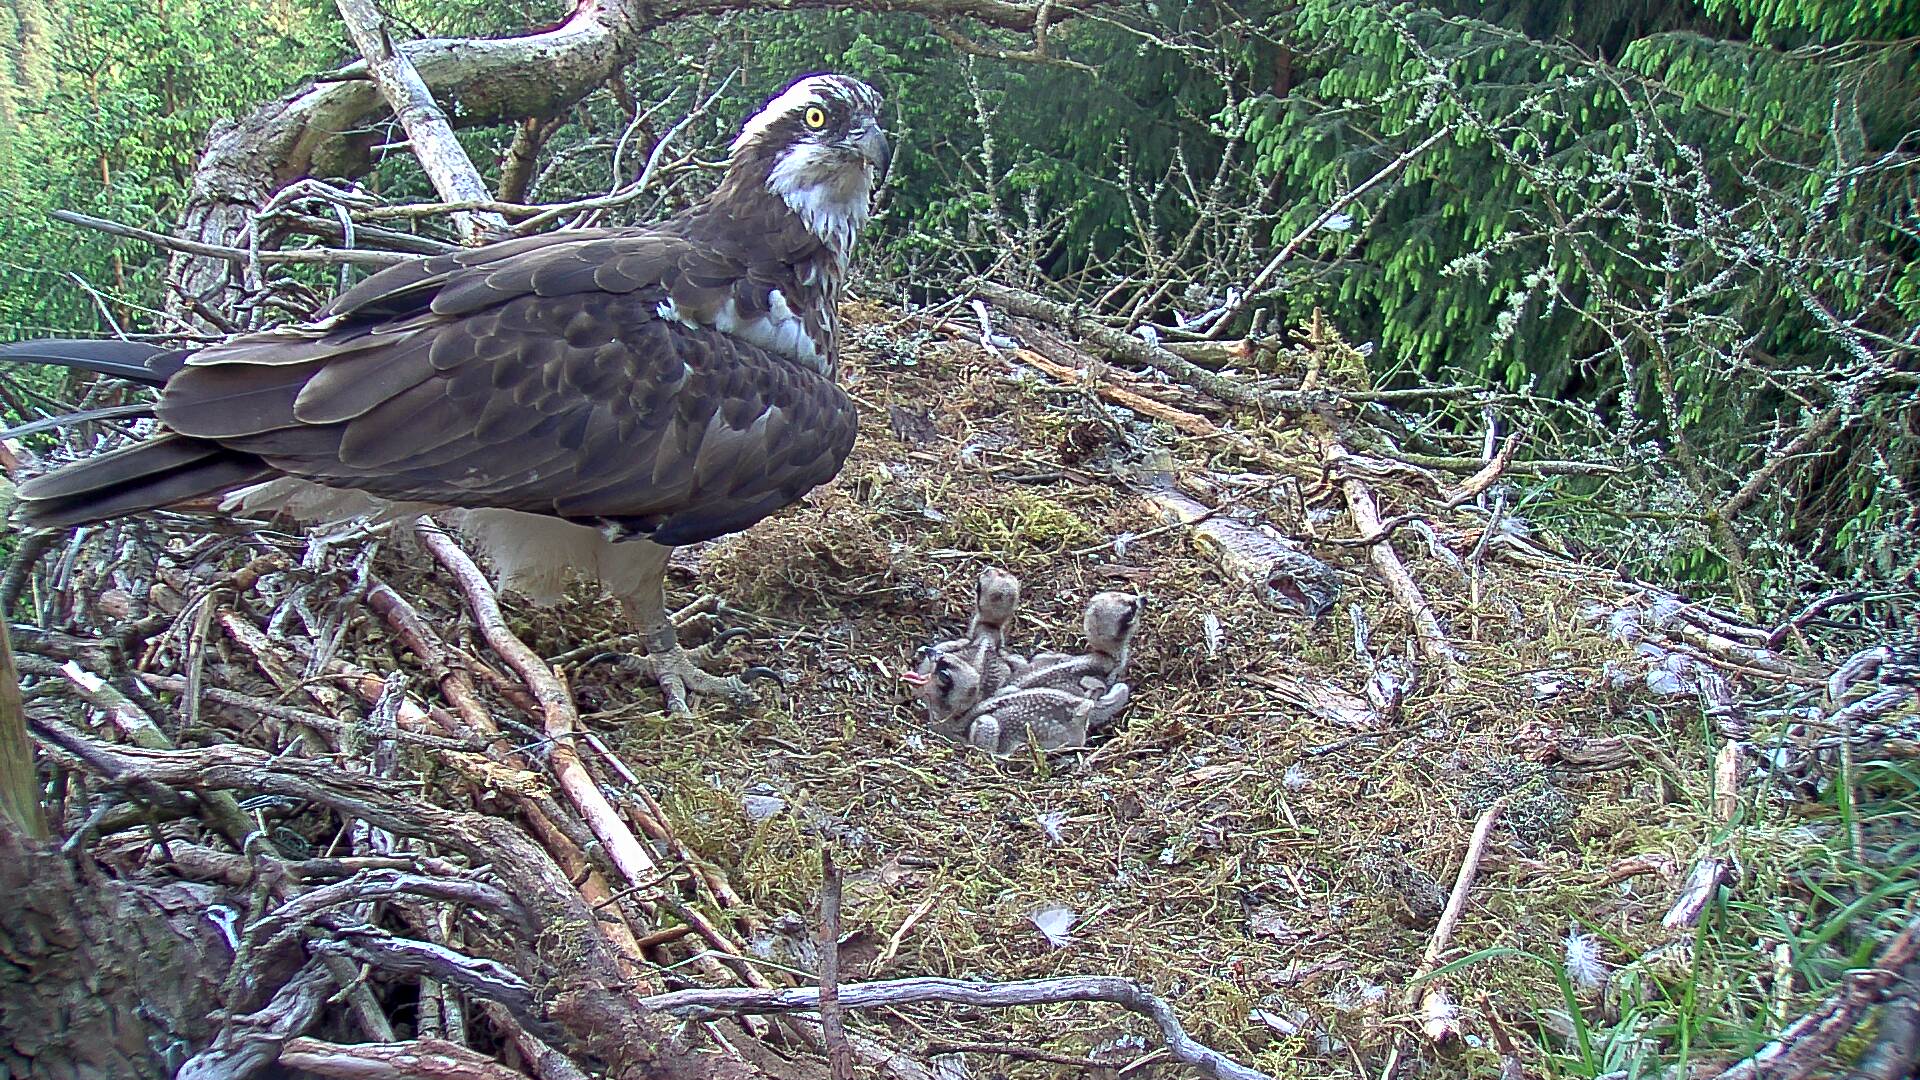 Male osprey guarding chicks in nest